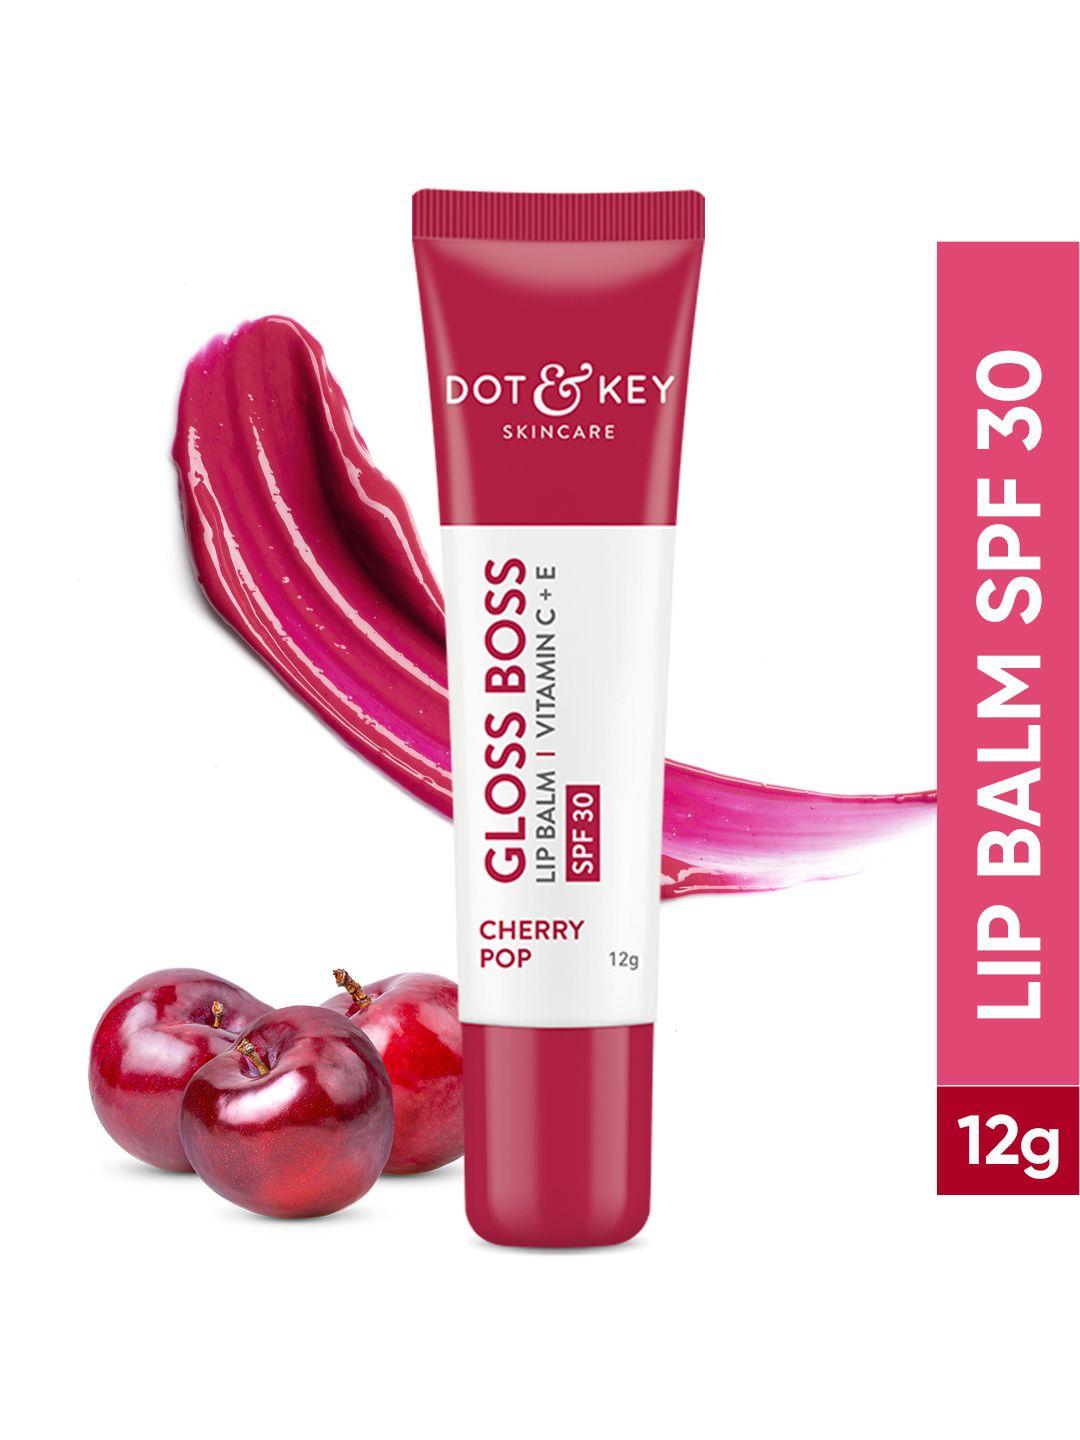 dot & key gloss boss vitamin c+e tinted lip balm with spf 30 12 g - cherry pop